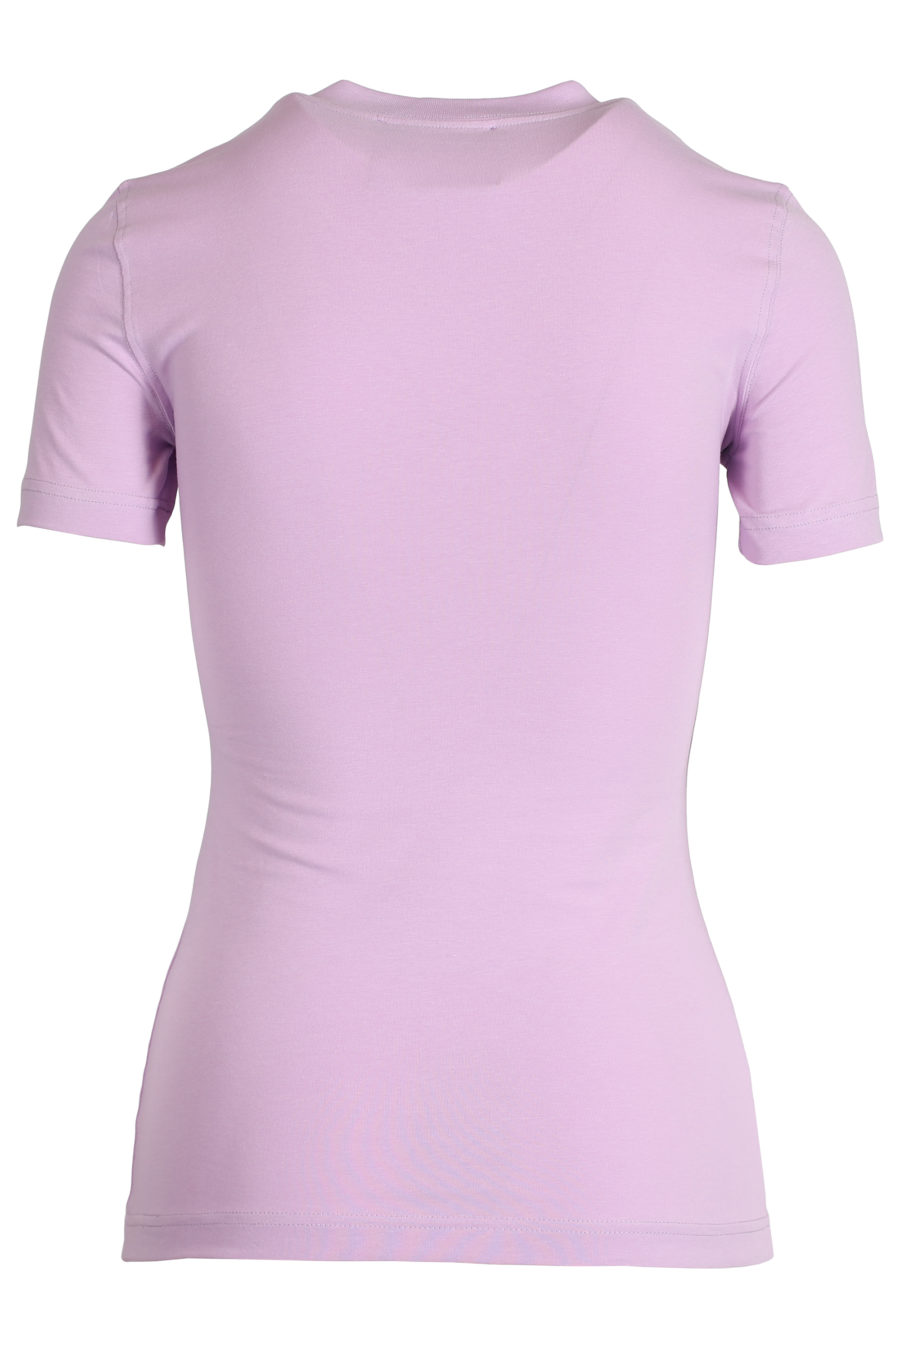 Camiseta lila con logo plateado - IMG 5477